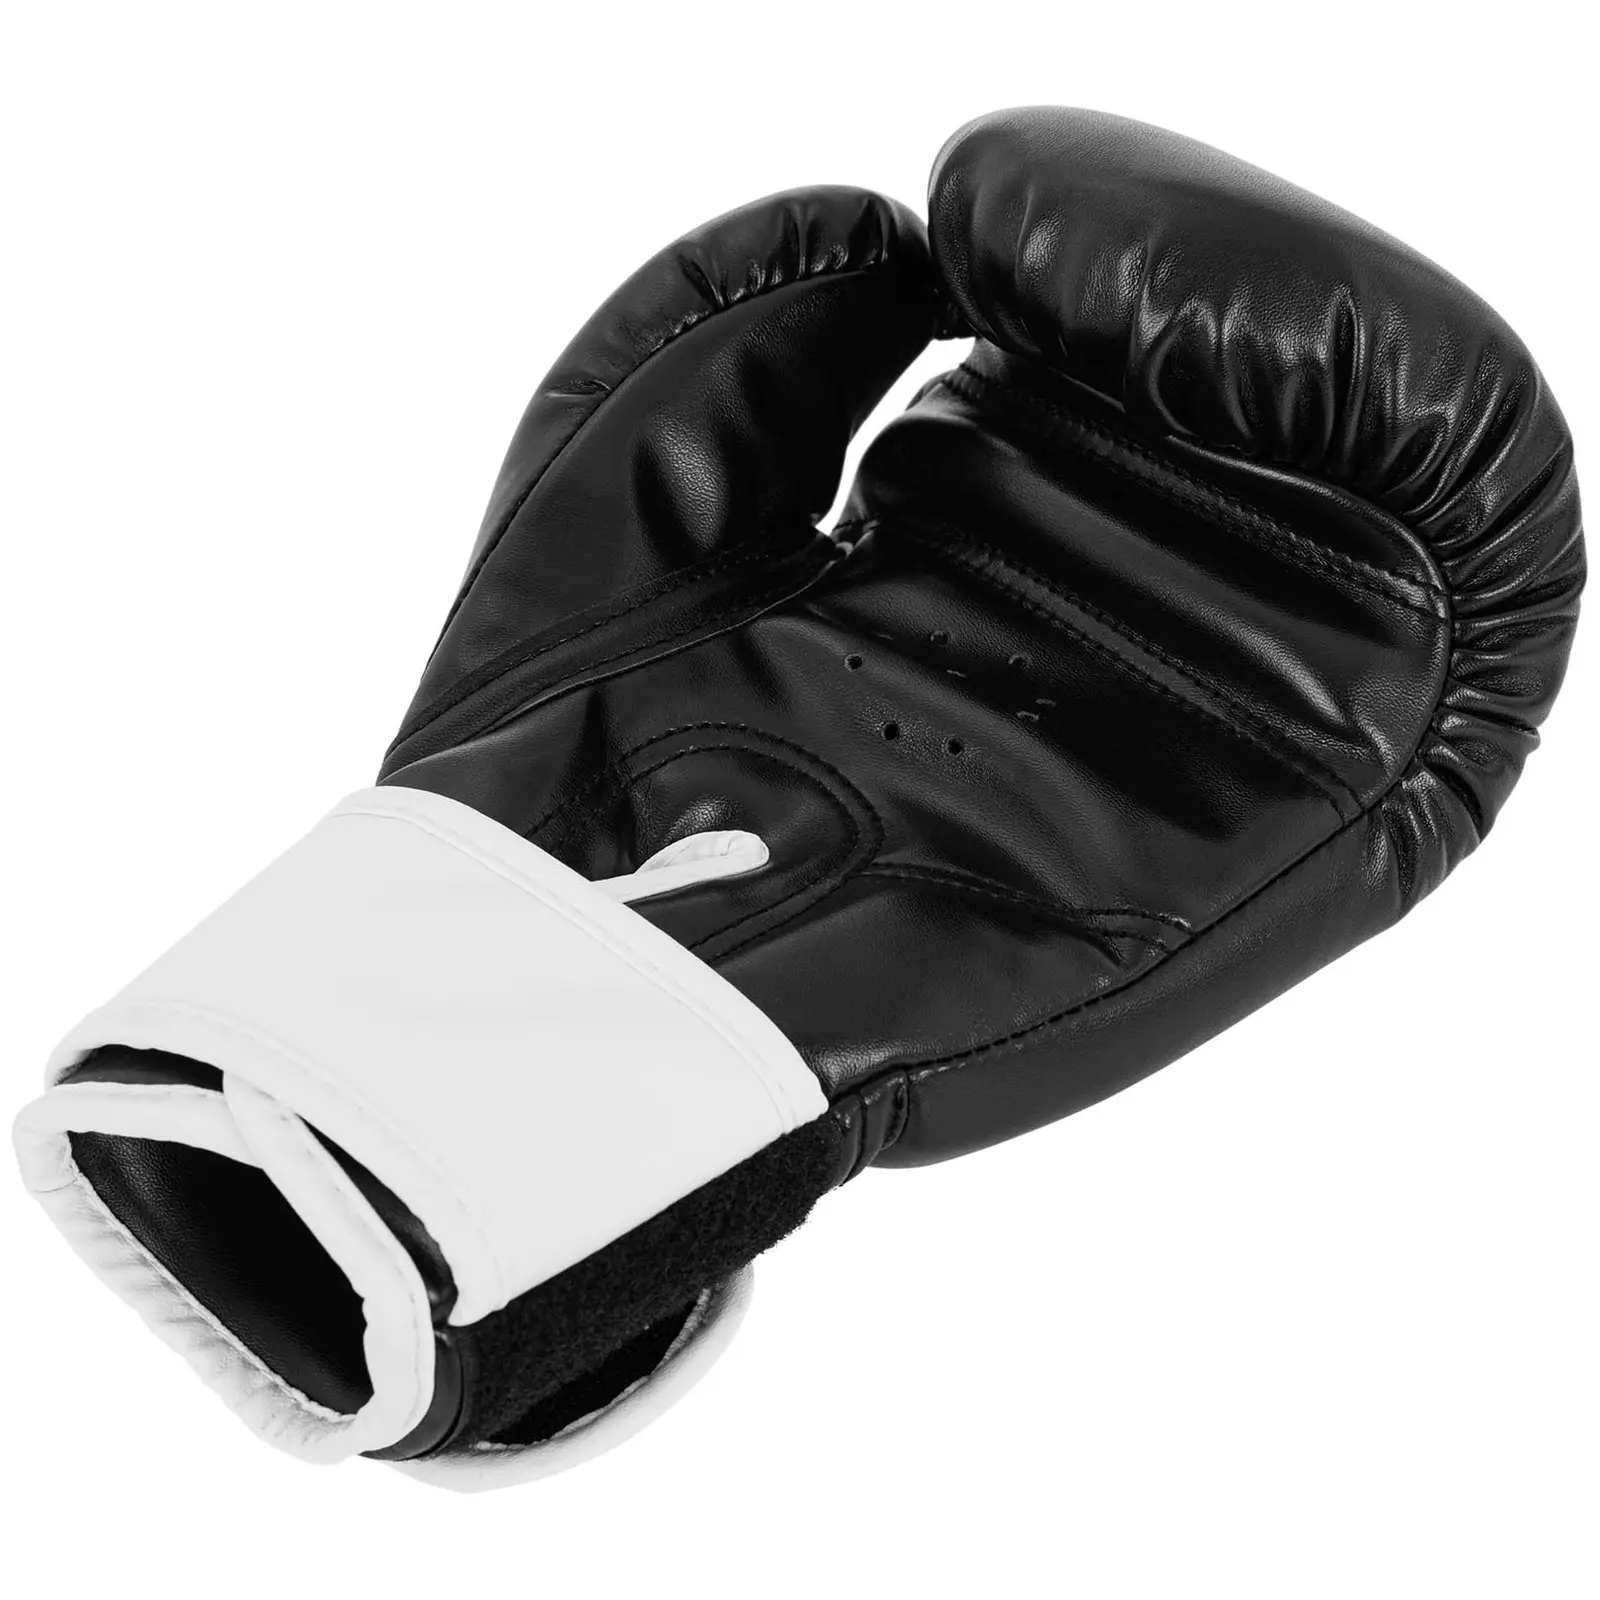 Kids Boxing Gloves - 6 oz - black